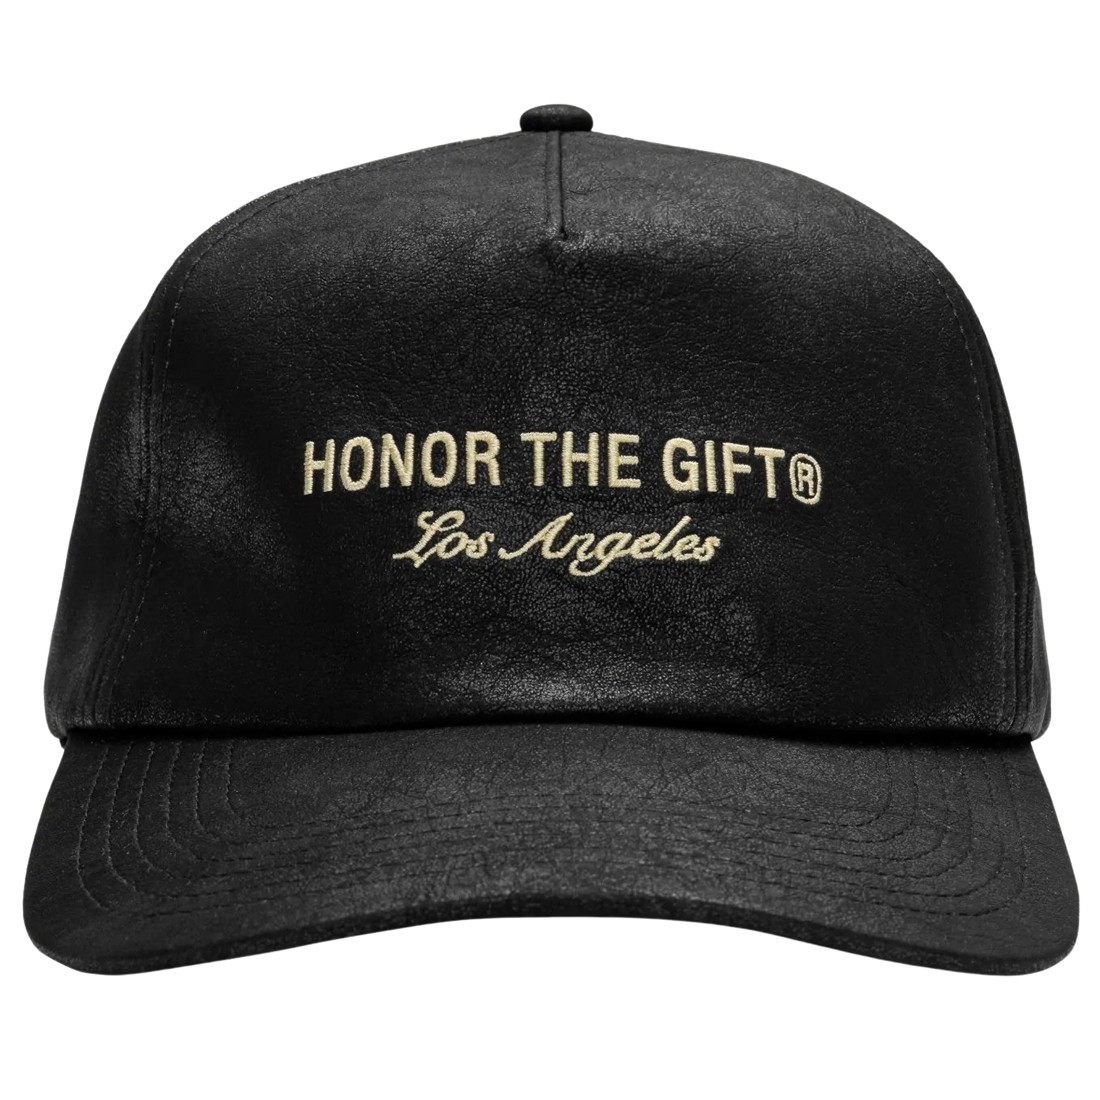 Honor The Gift Los Angeles cap Black (black)